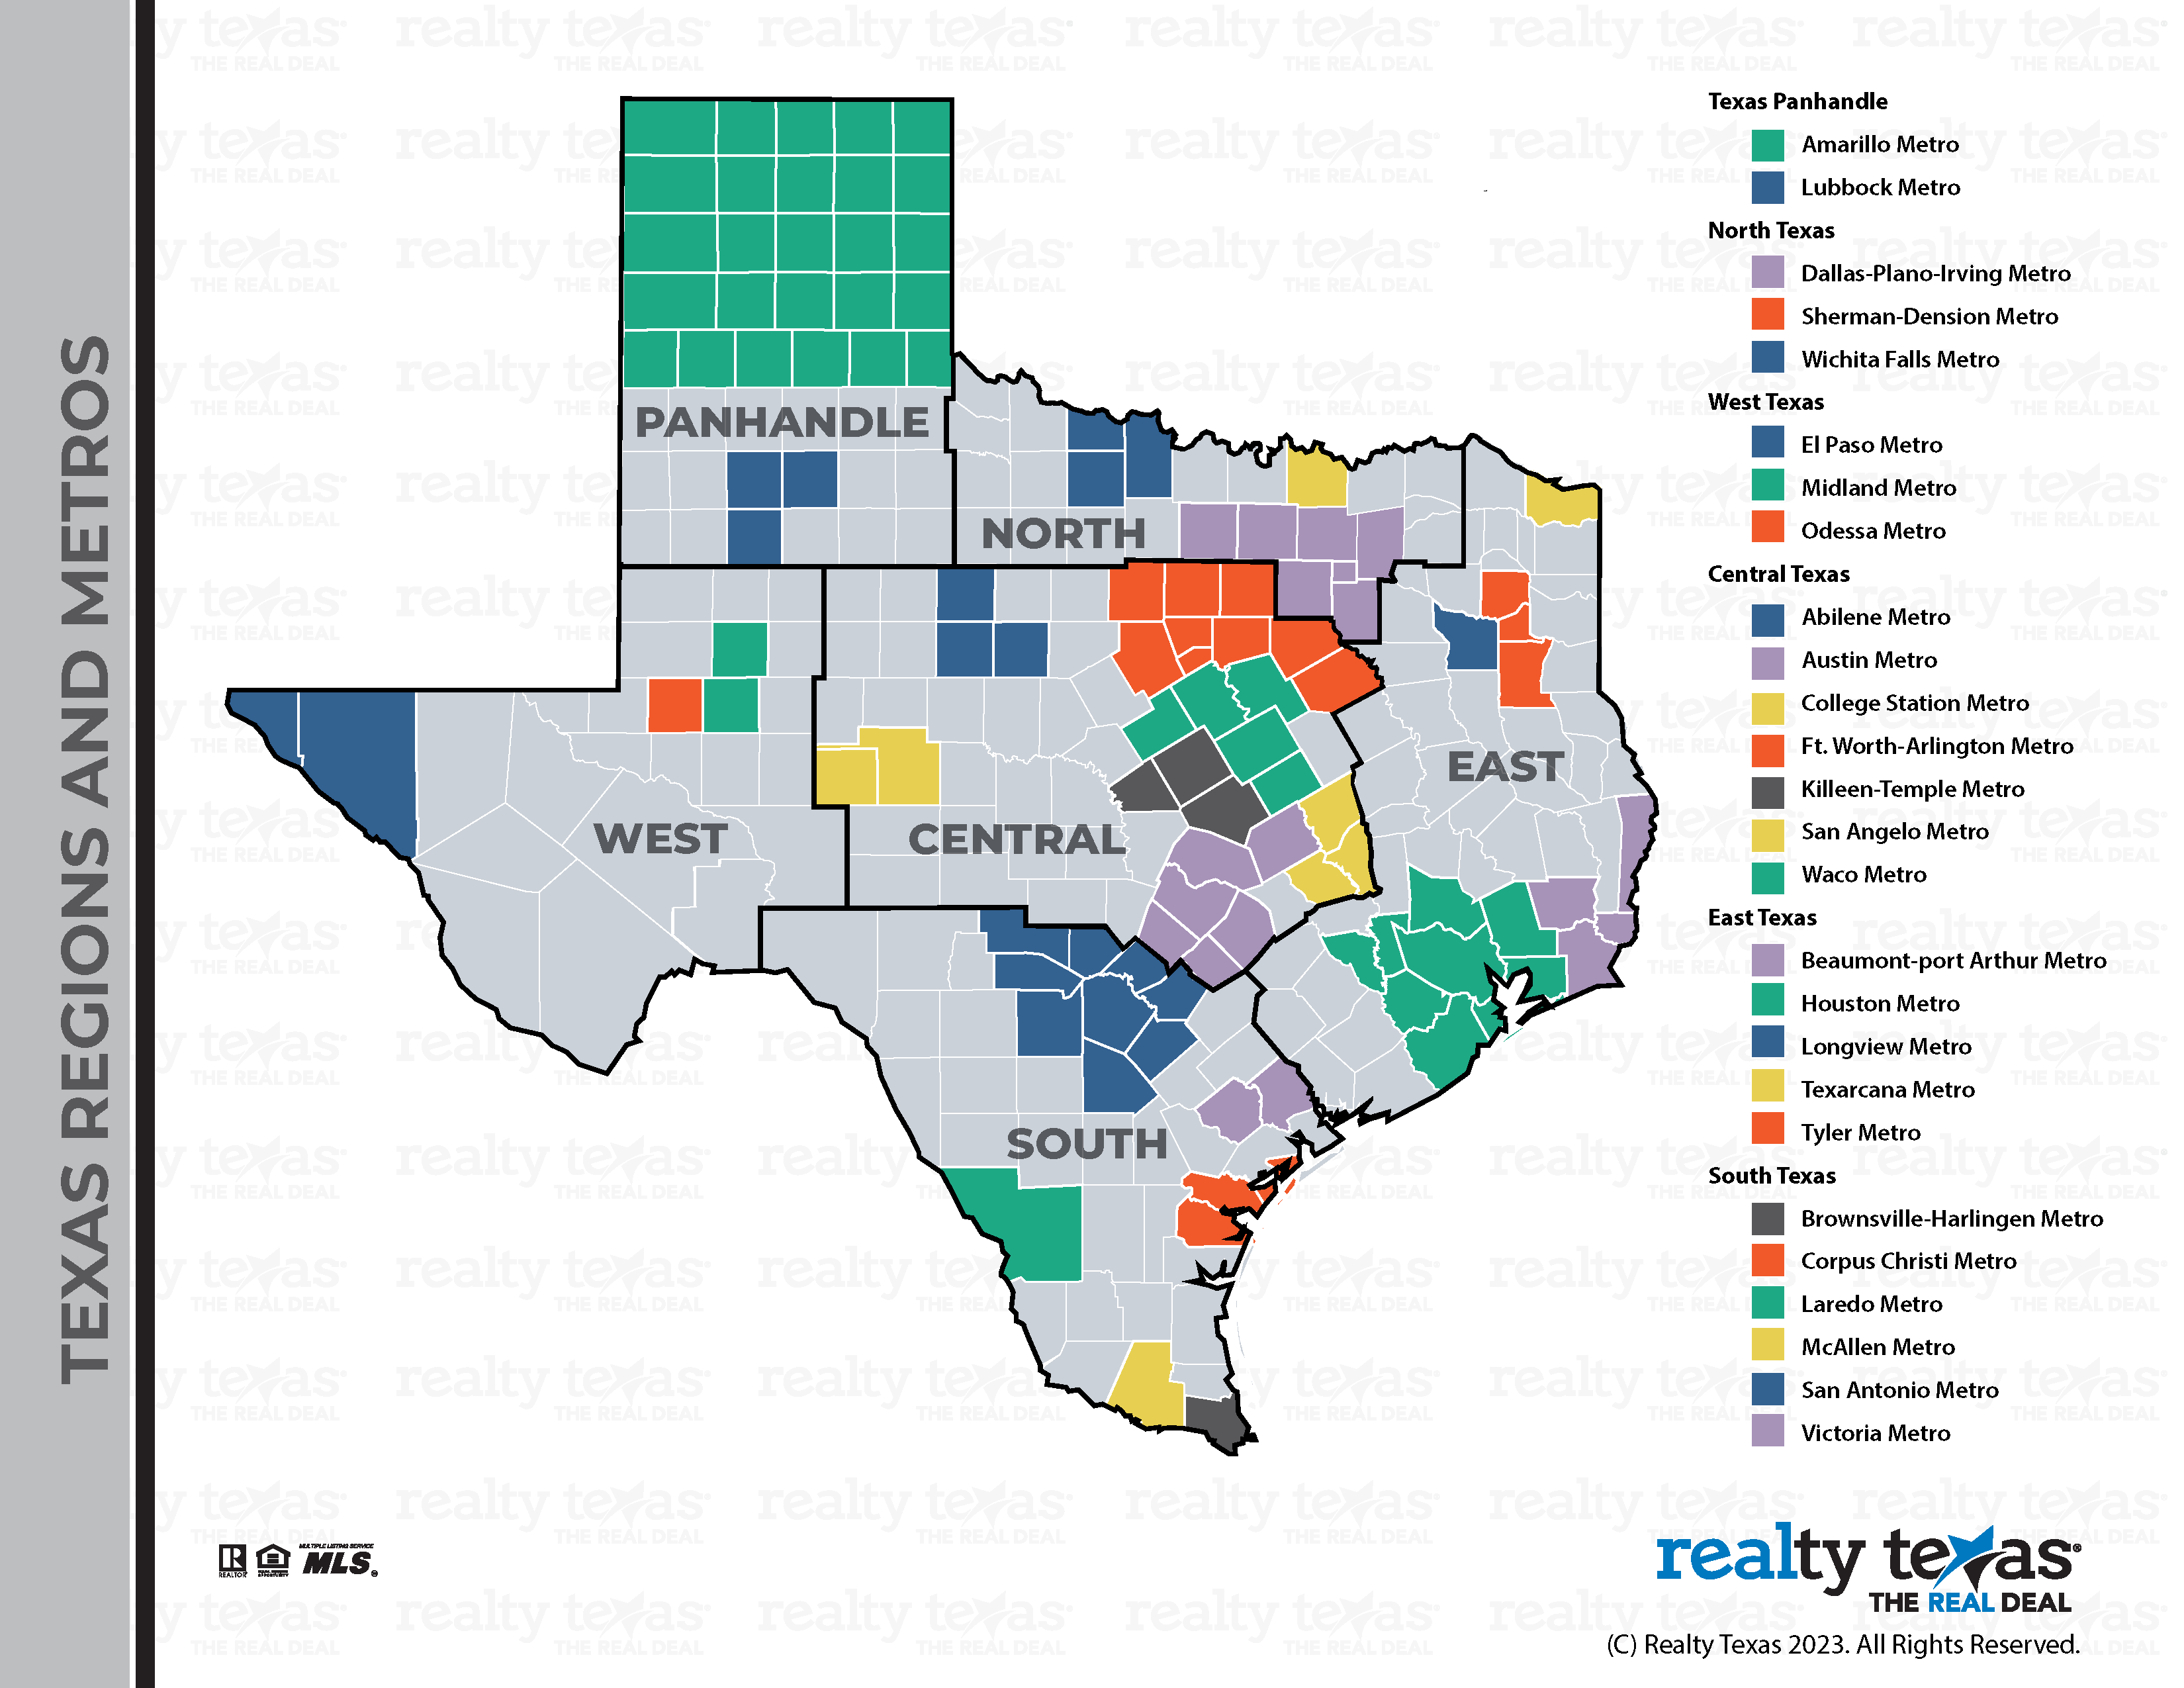 Realty Texas Region and Metros